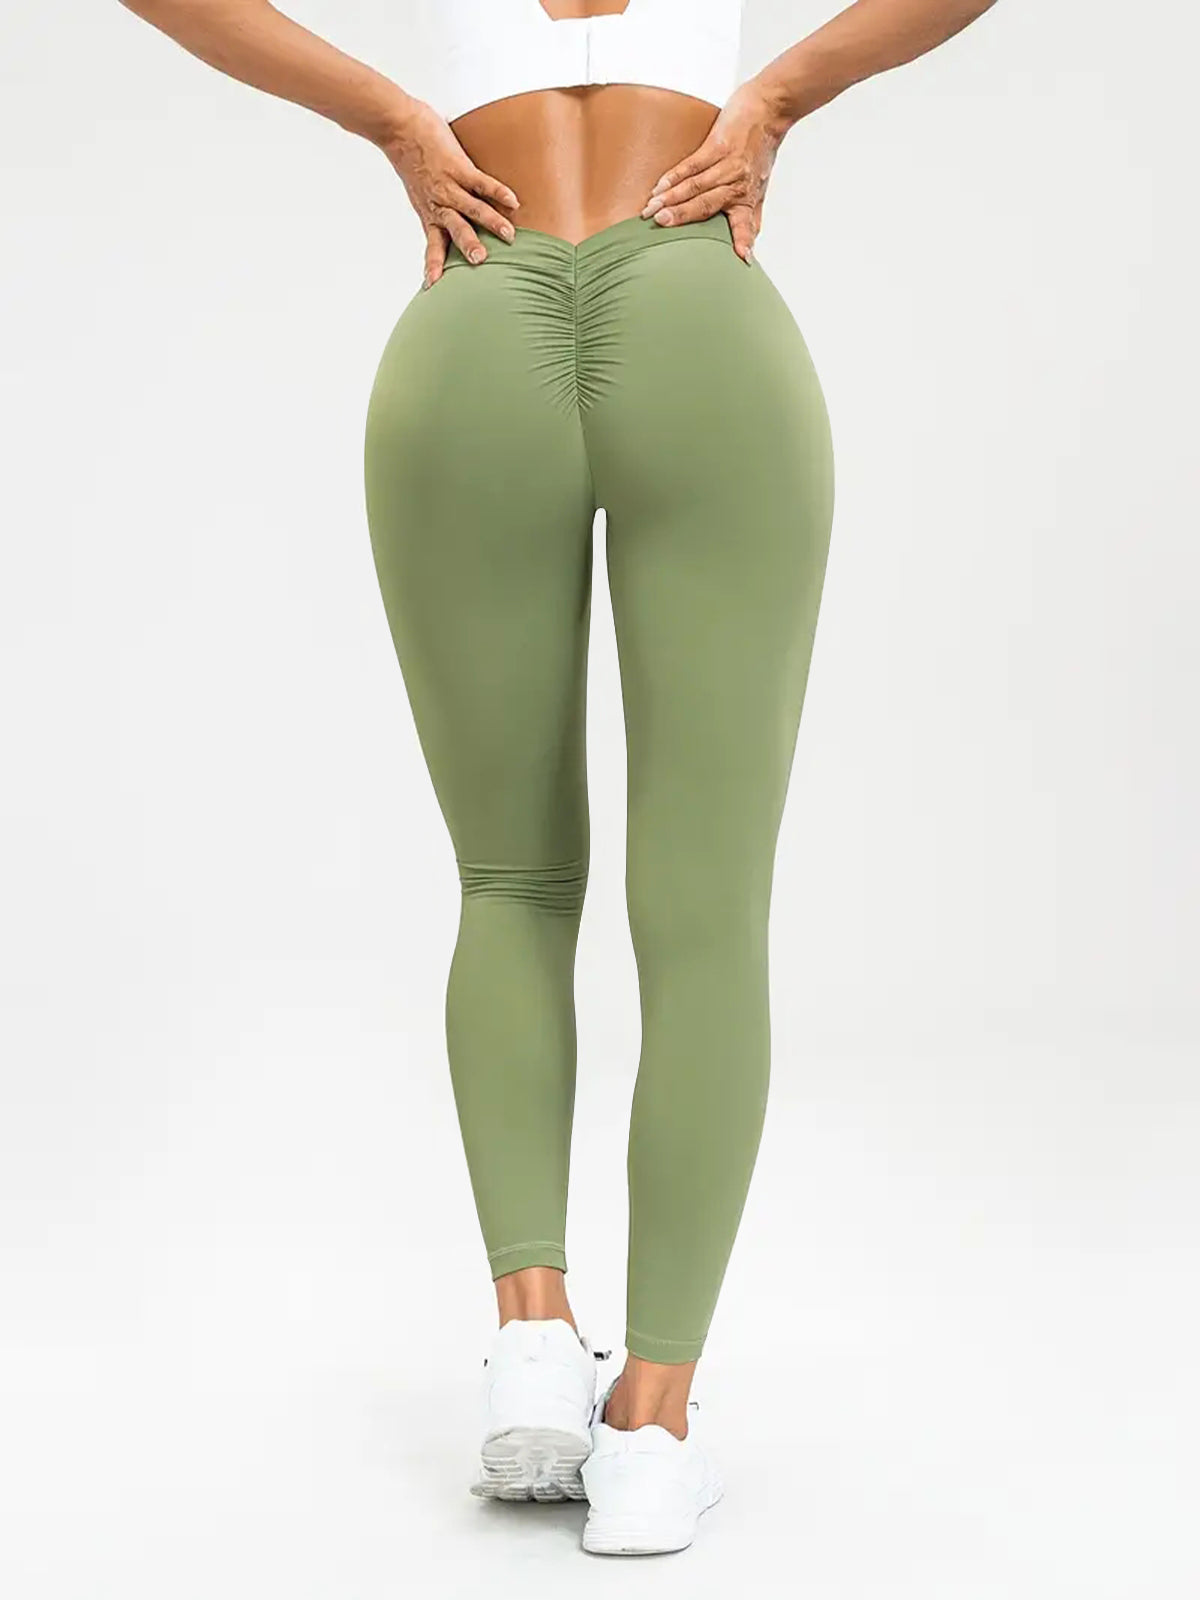 Women's Yoga Pants High Waist Lift High Elastic Tight Fitness Trousers - Better Life